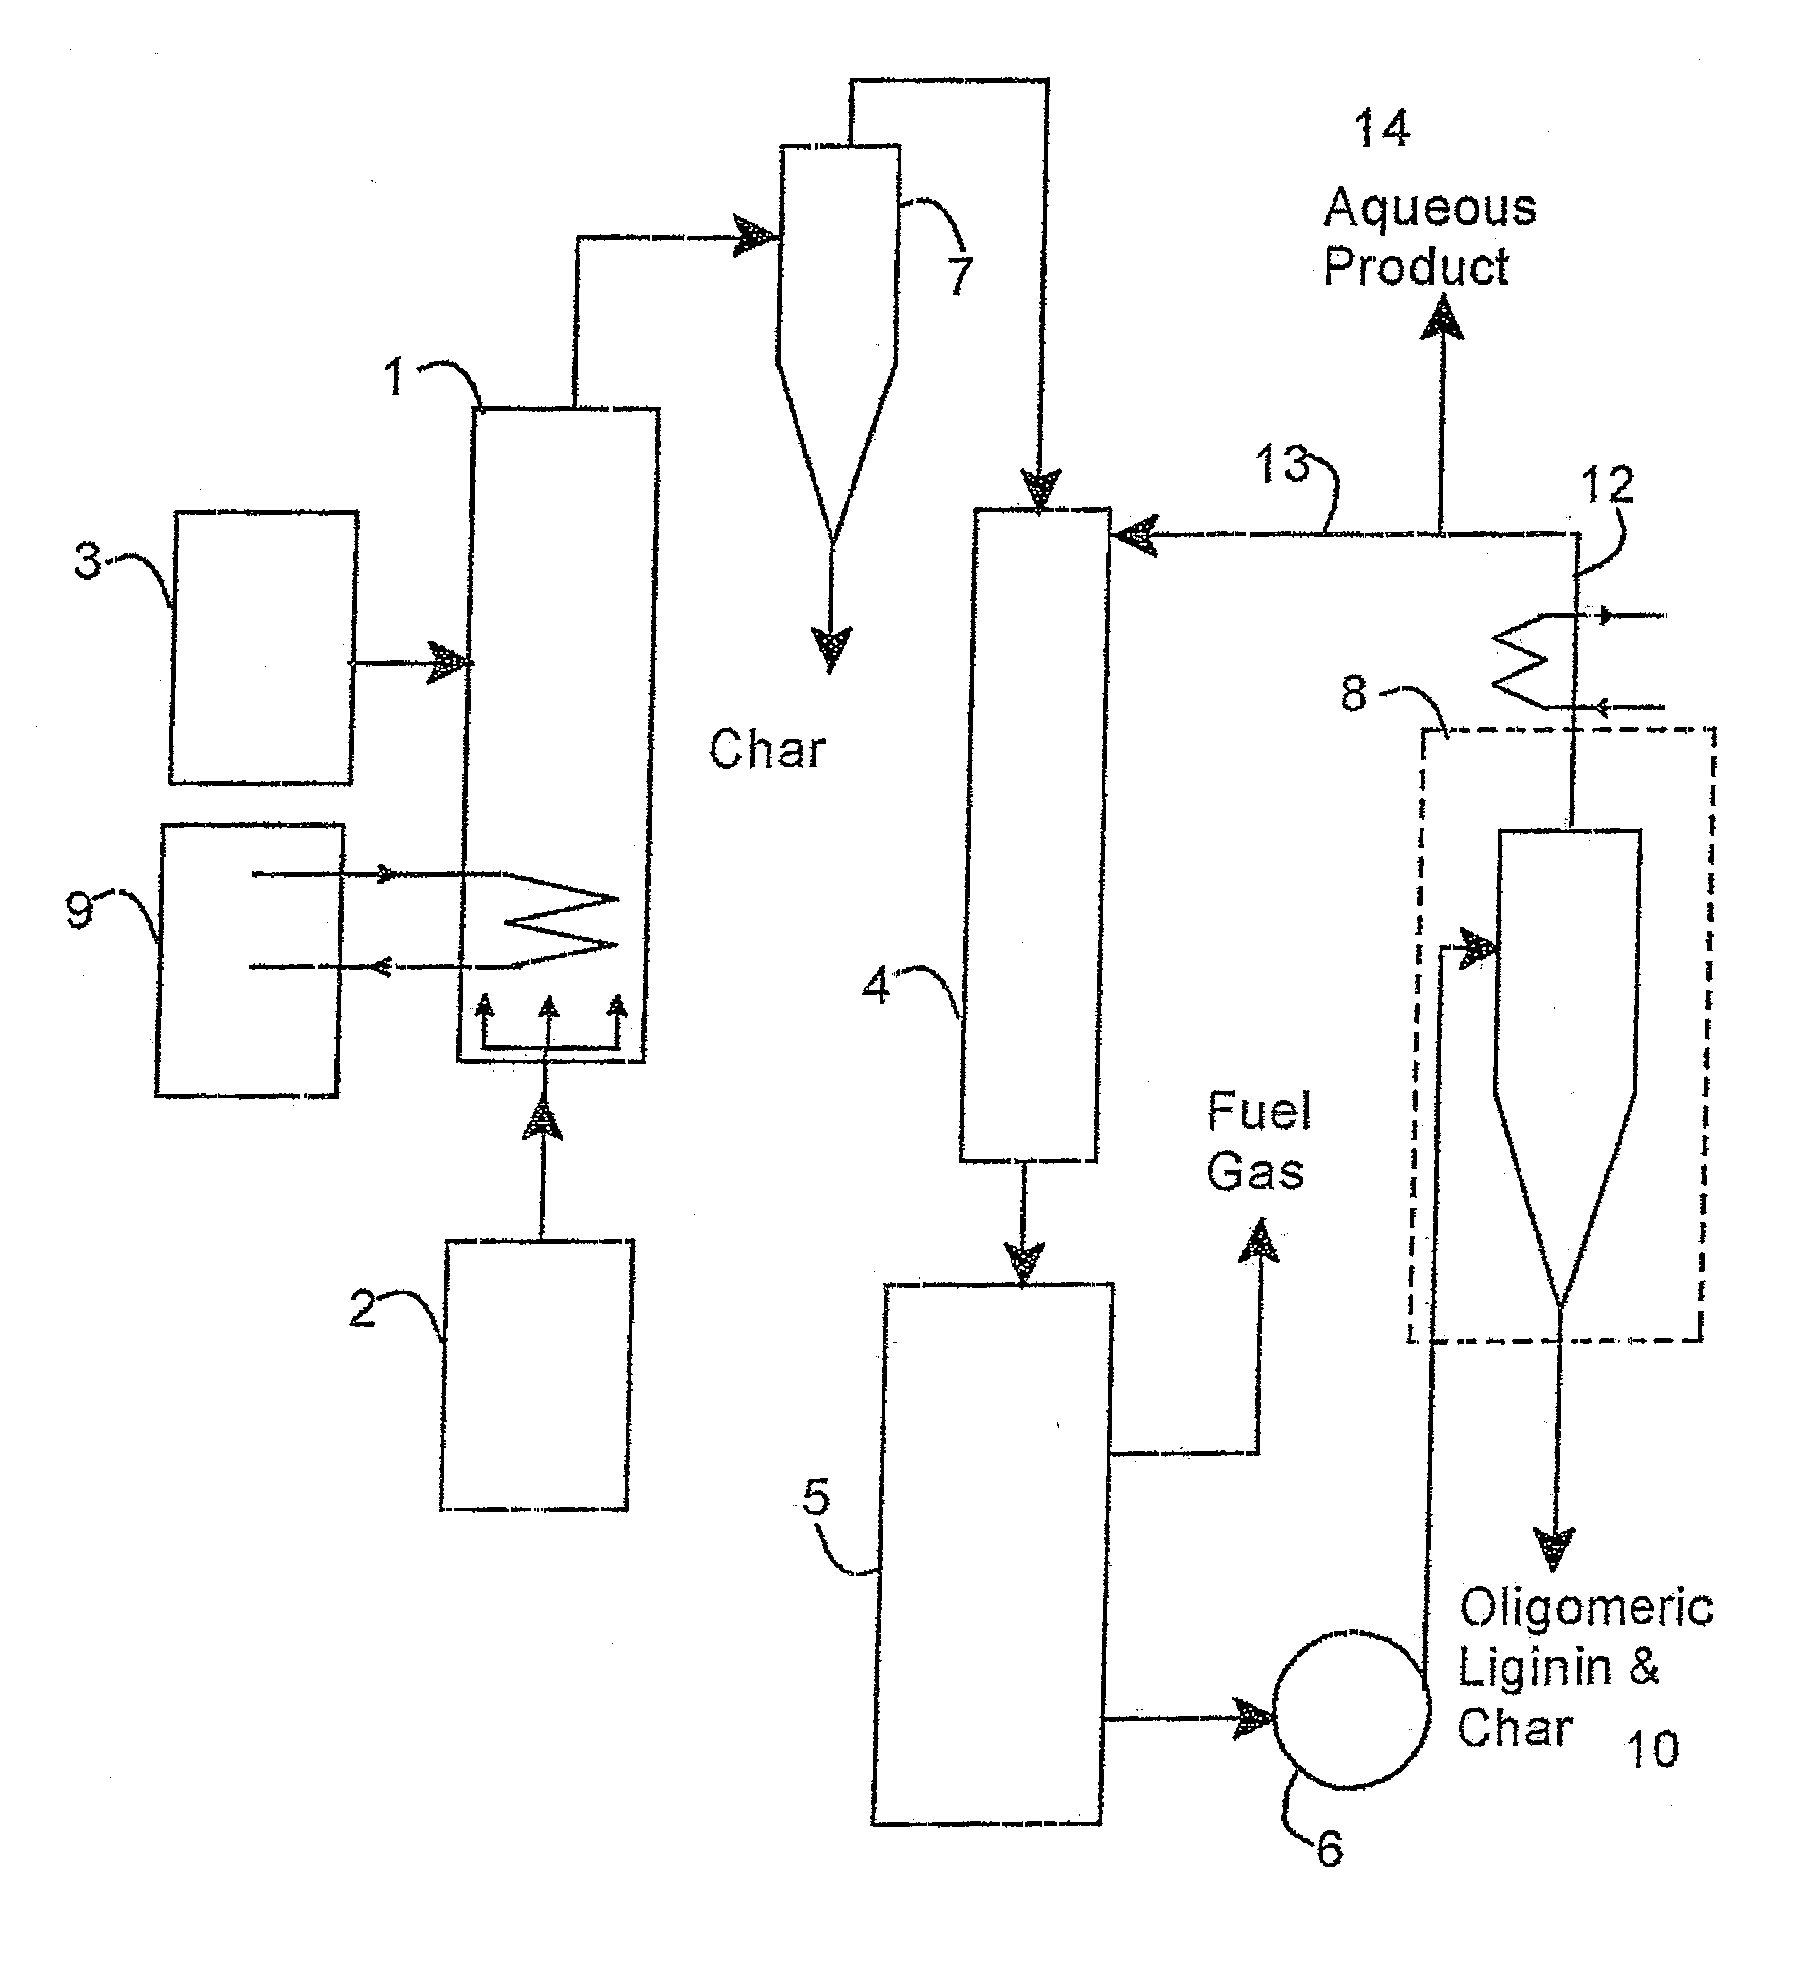 Method of producing hodge carbonyls and oligomeric lignin